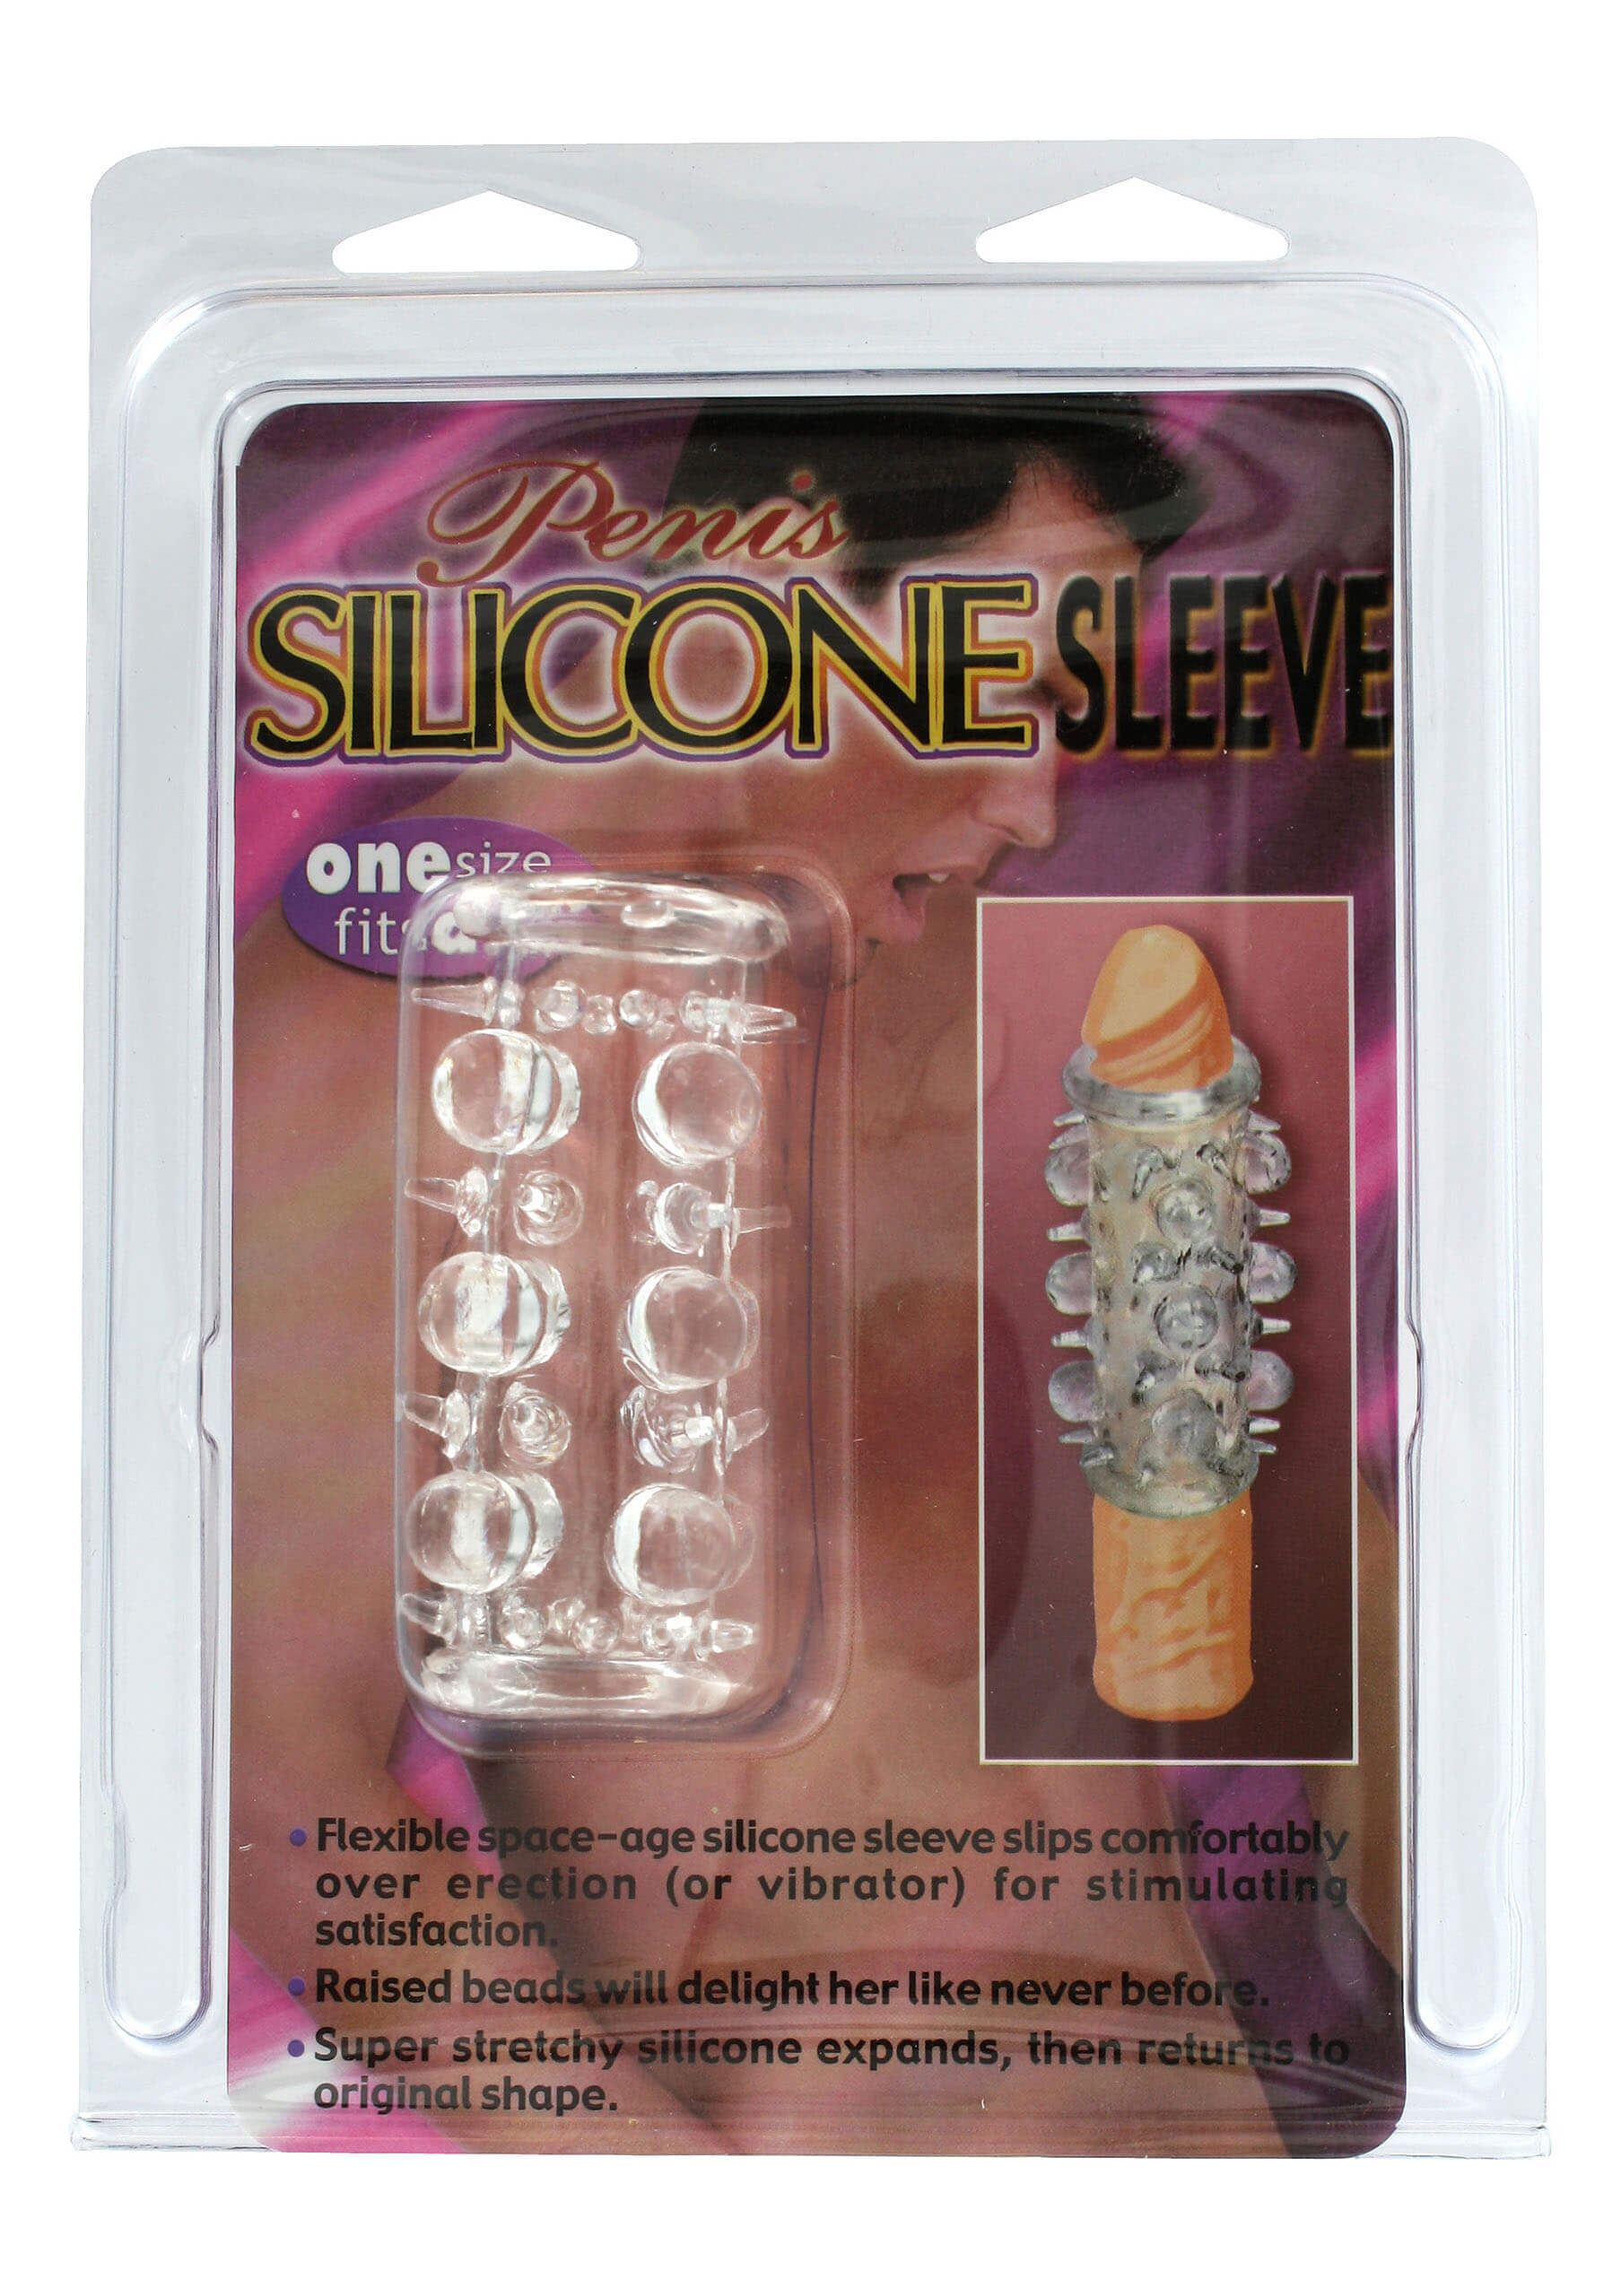 Penis Silicone Sleeve